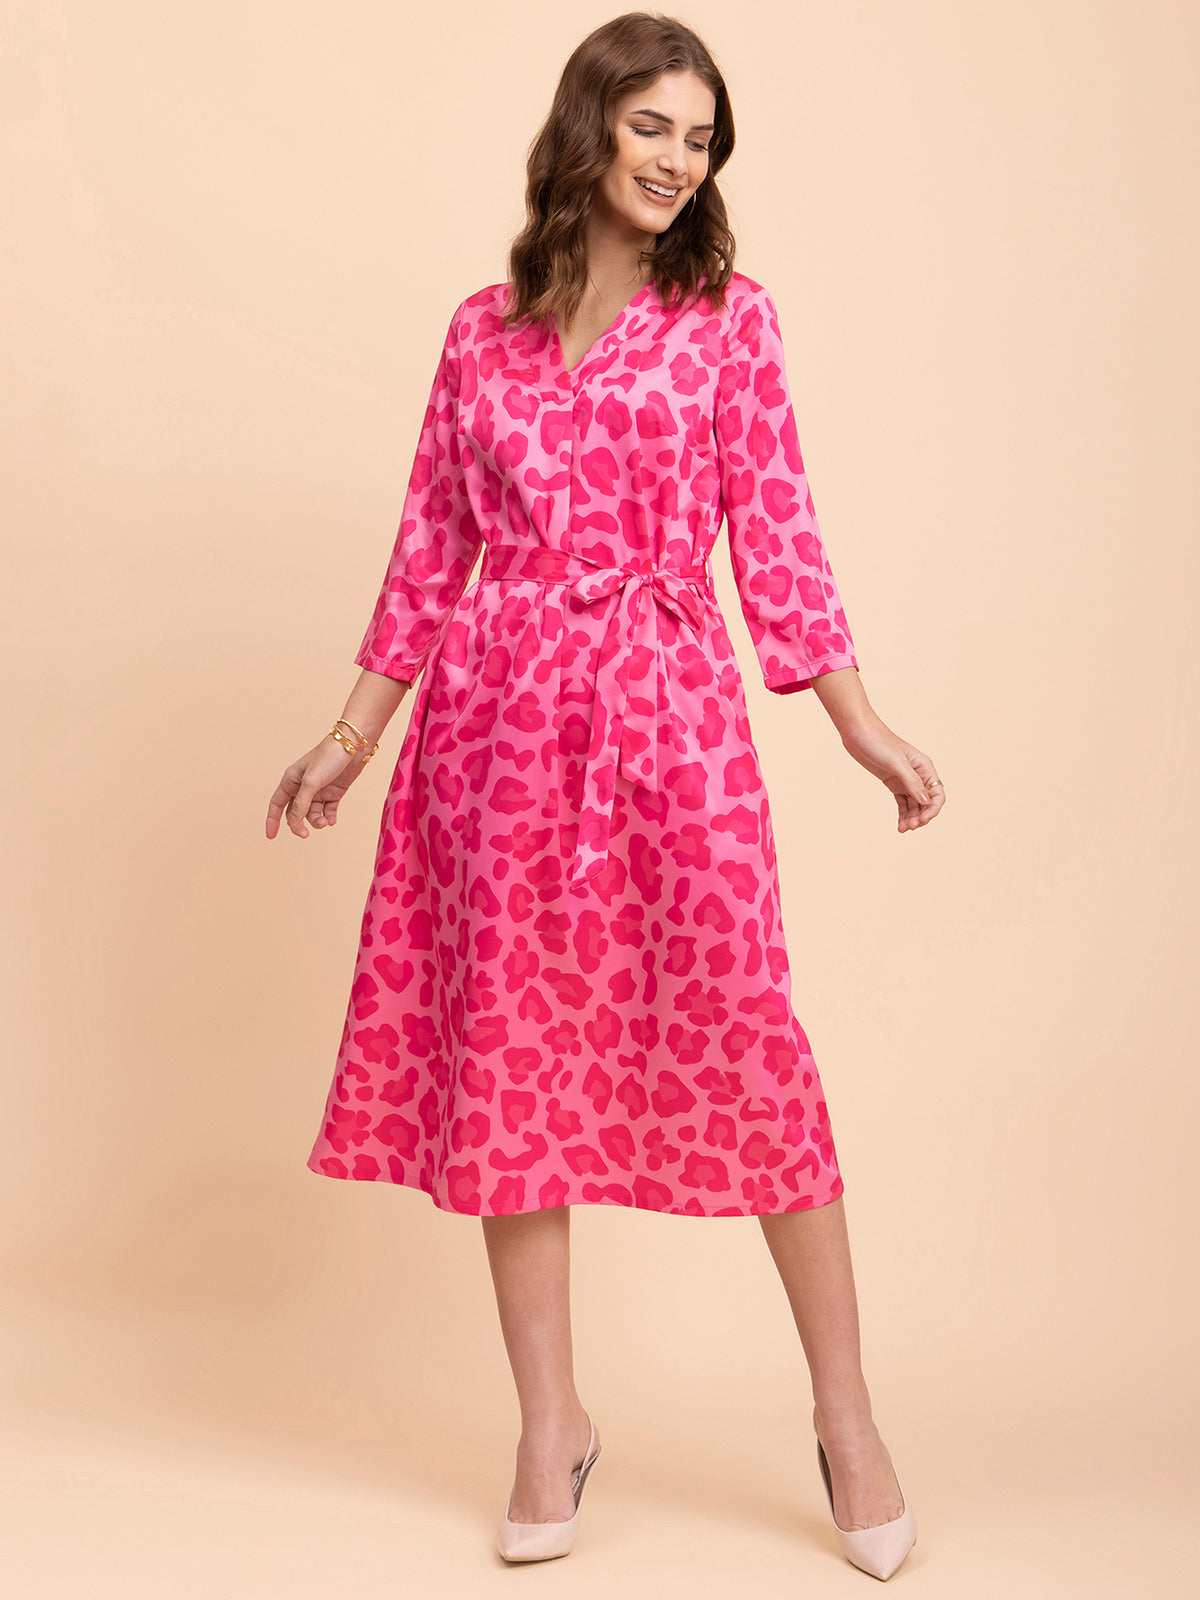 Satin Animal Print A-Line Dress - Fuchsia and Pink